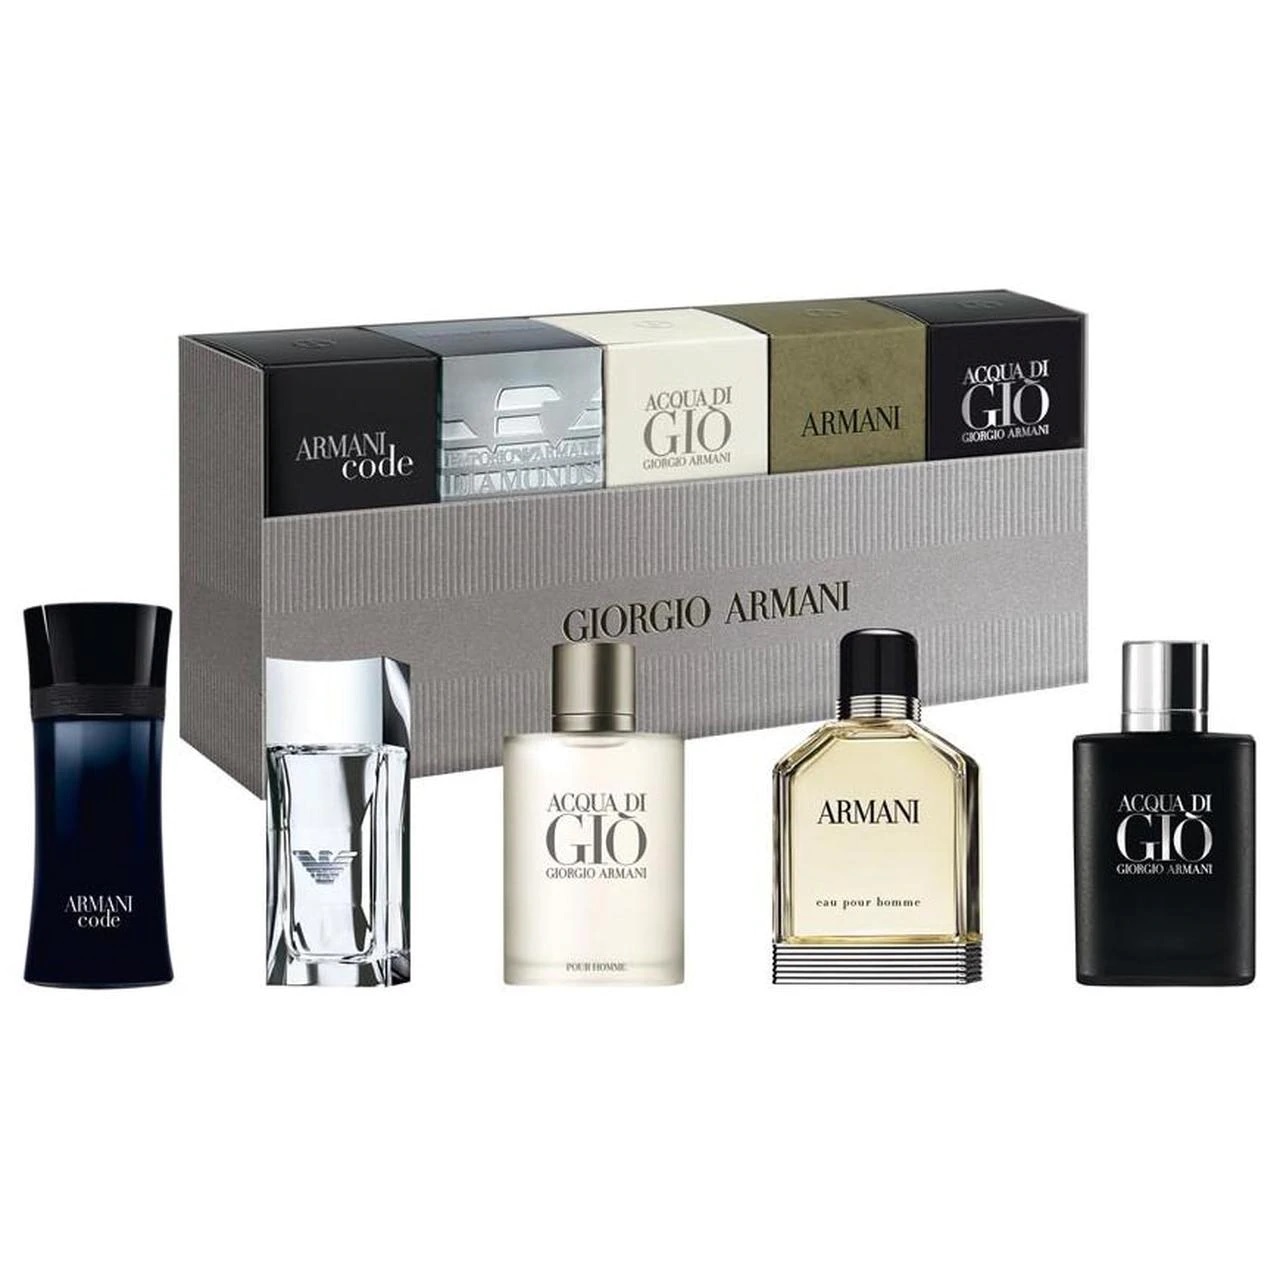 Total 44+ imagen armani mens perfume gift set